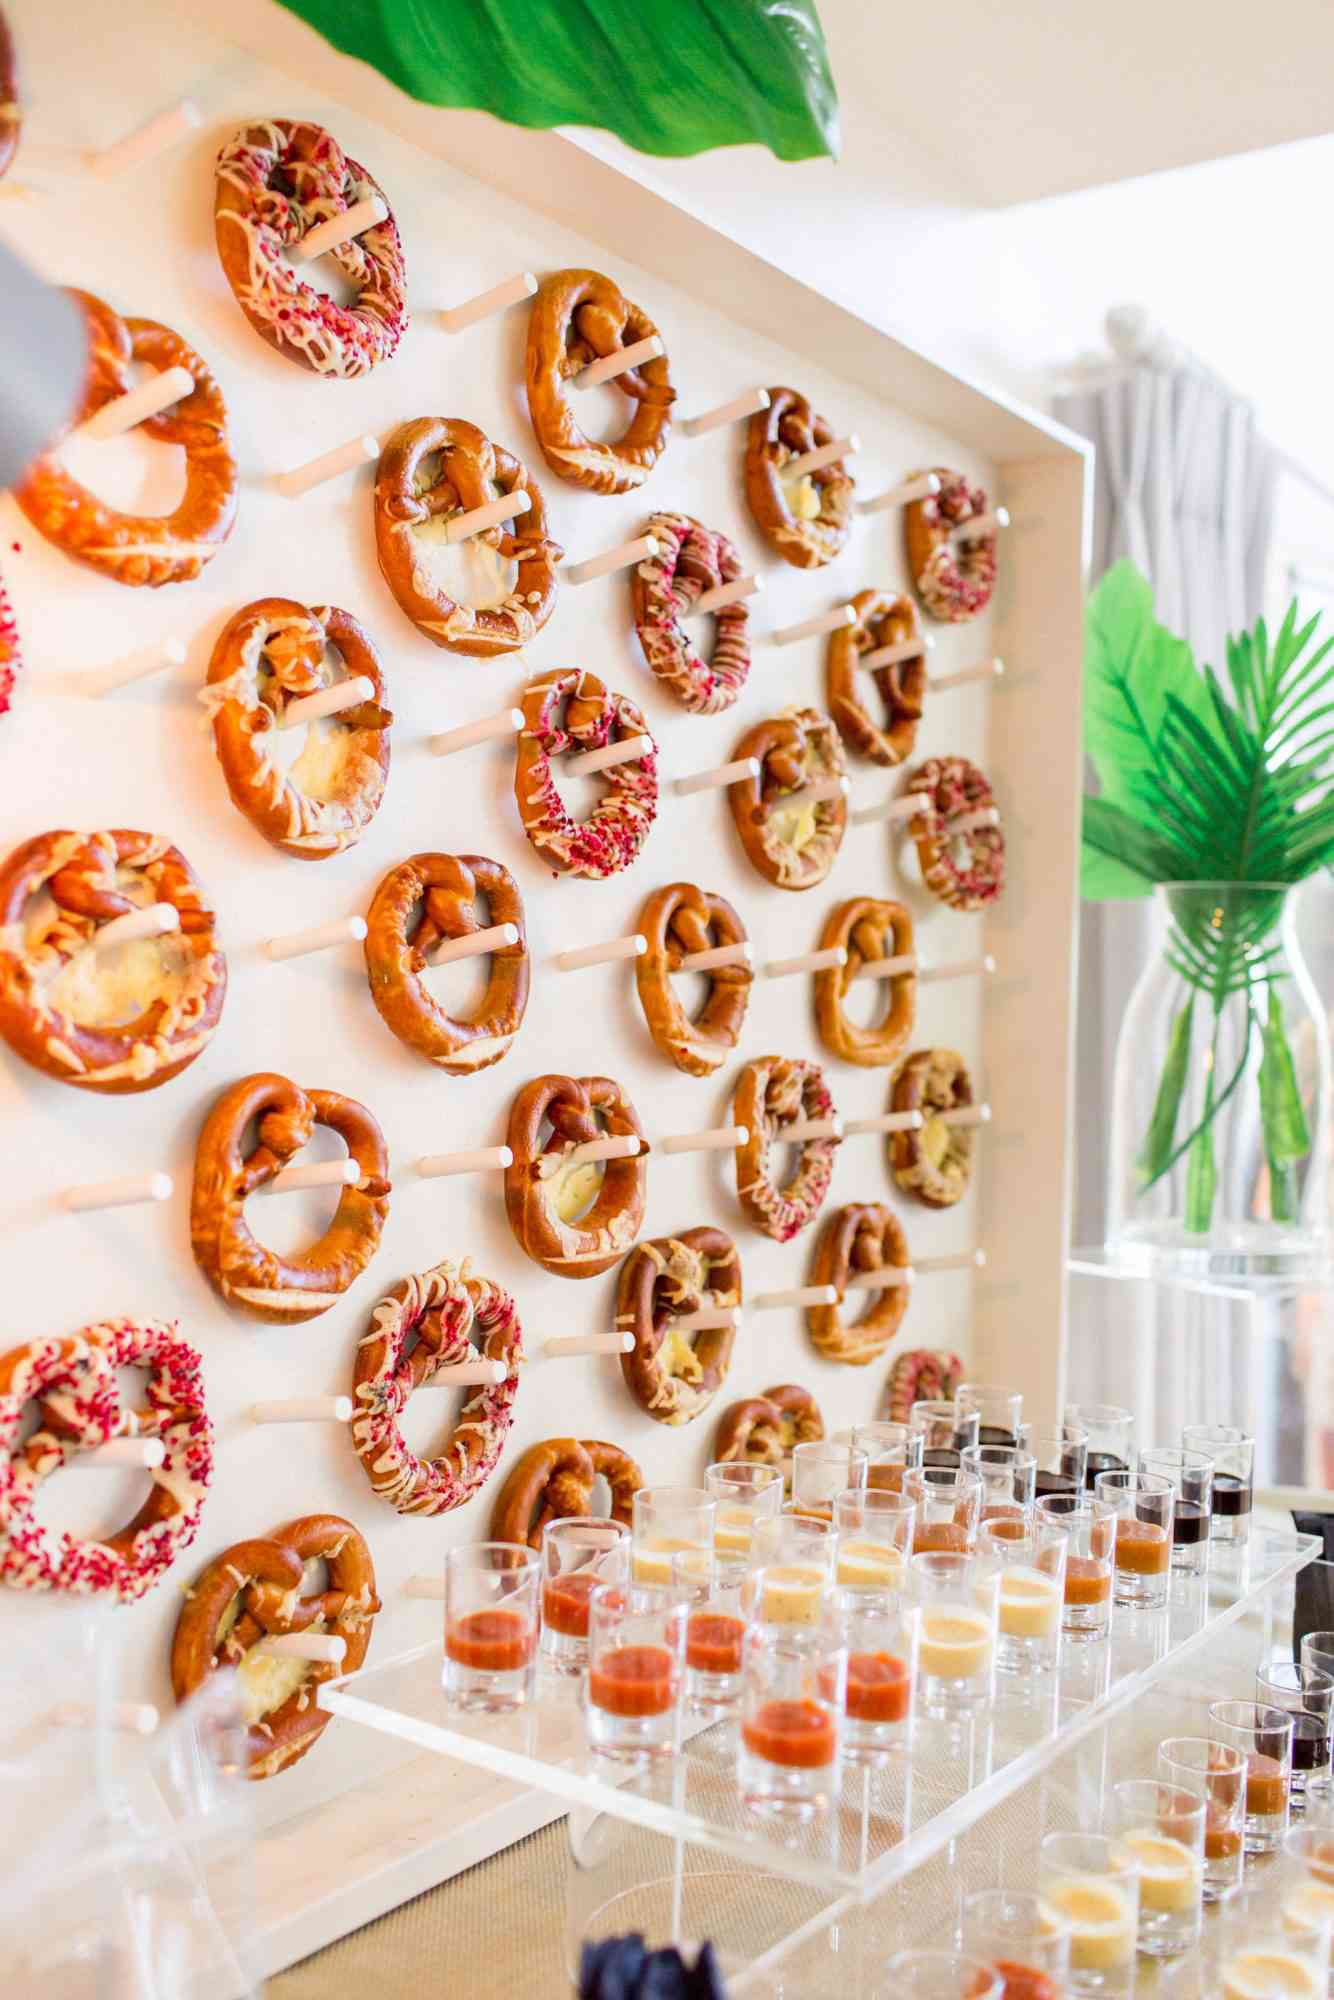 pretzel food wall with condiments